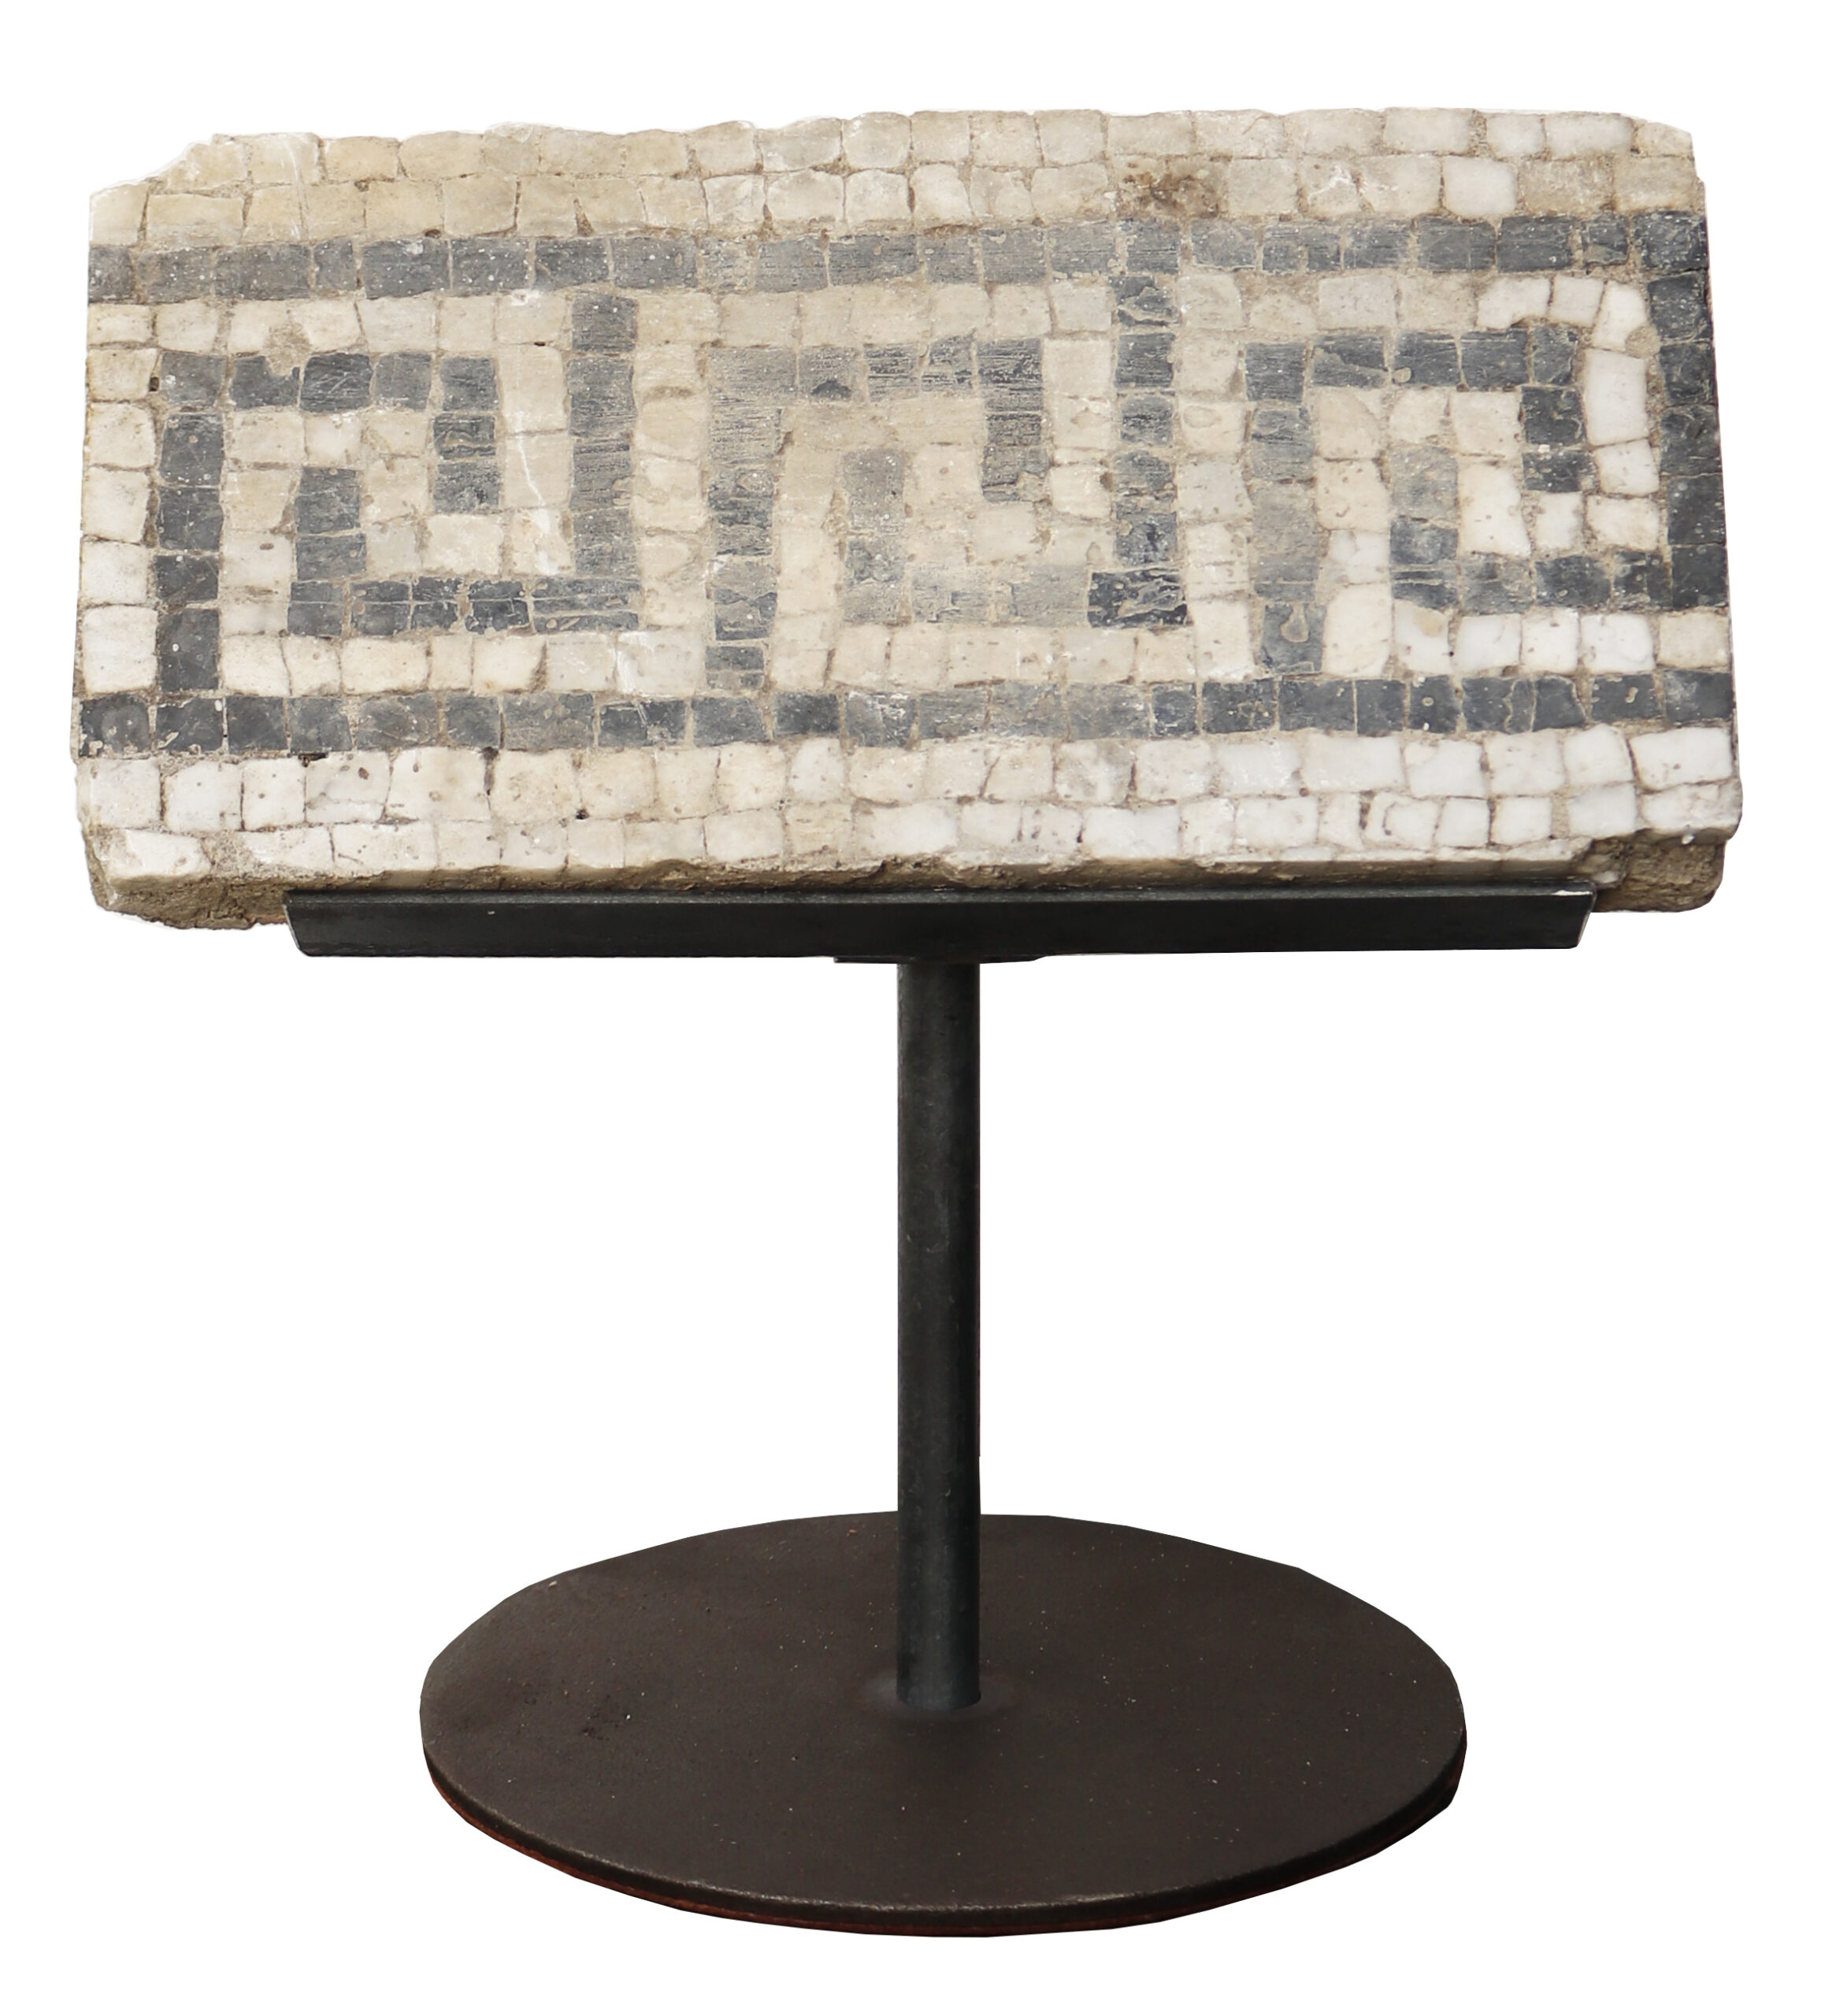 Antique Roman Style Mosaic Floor Fragment